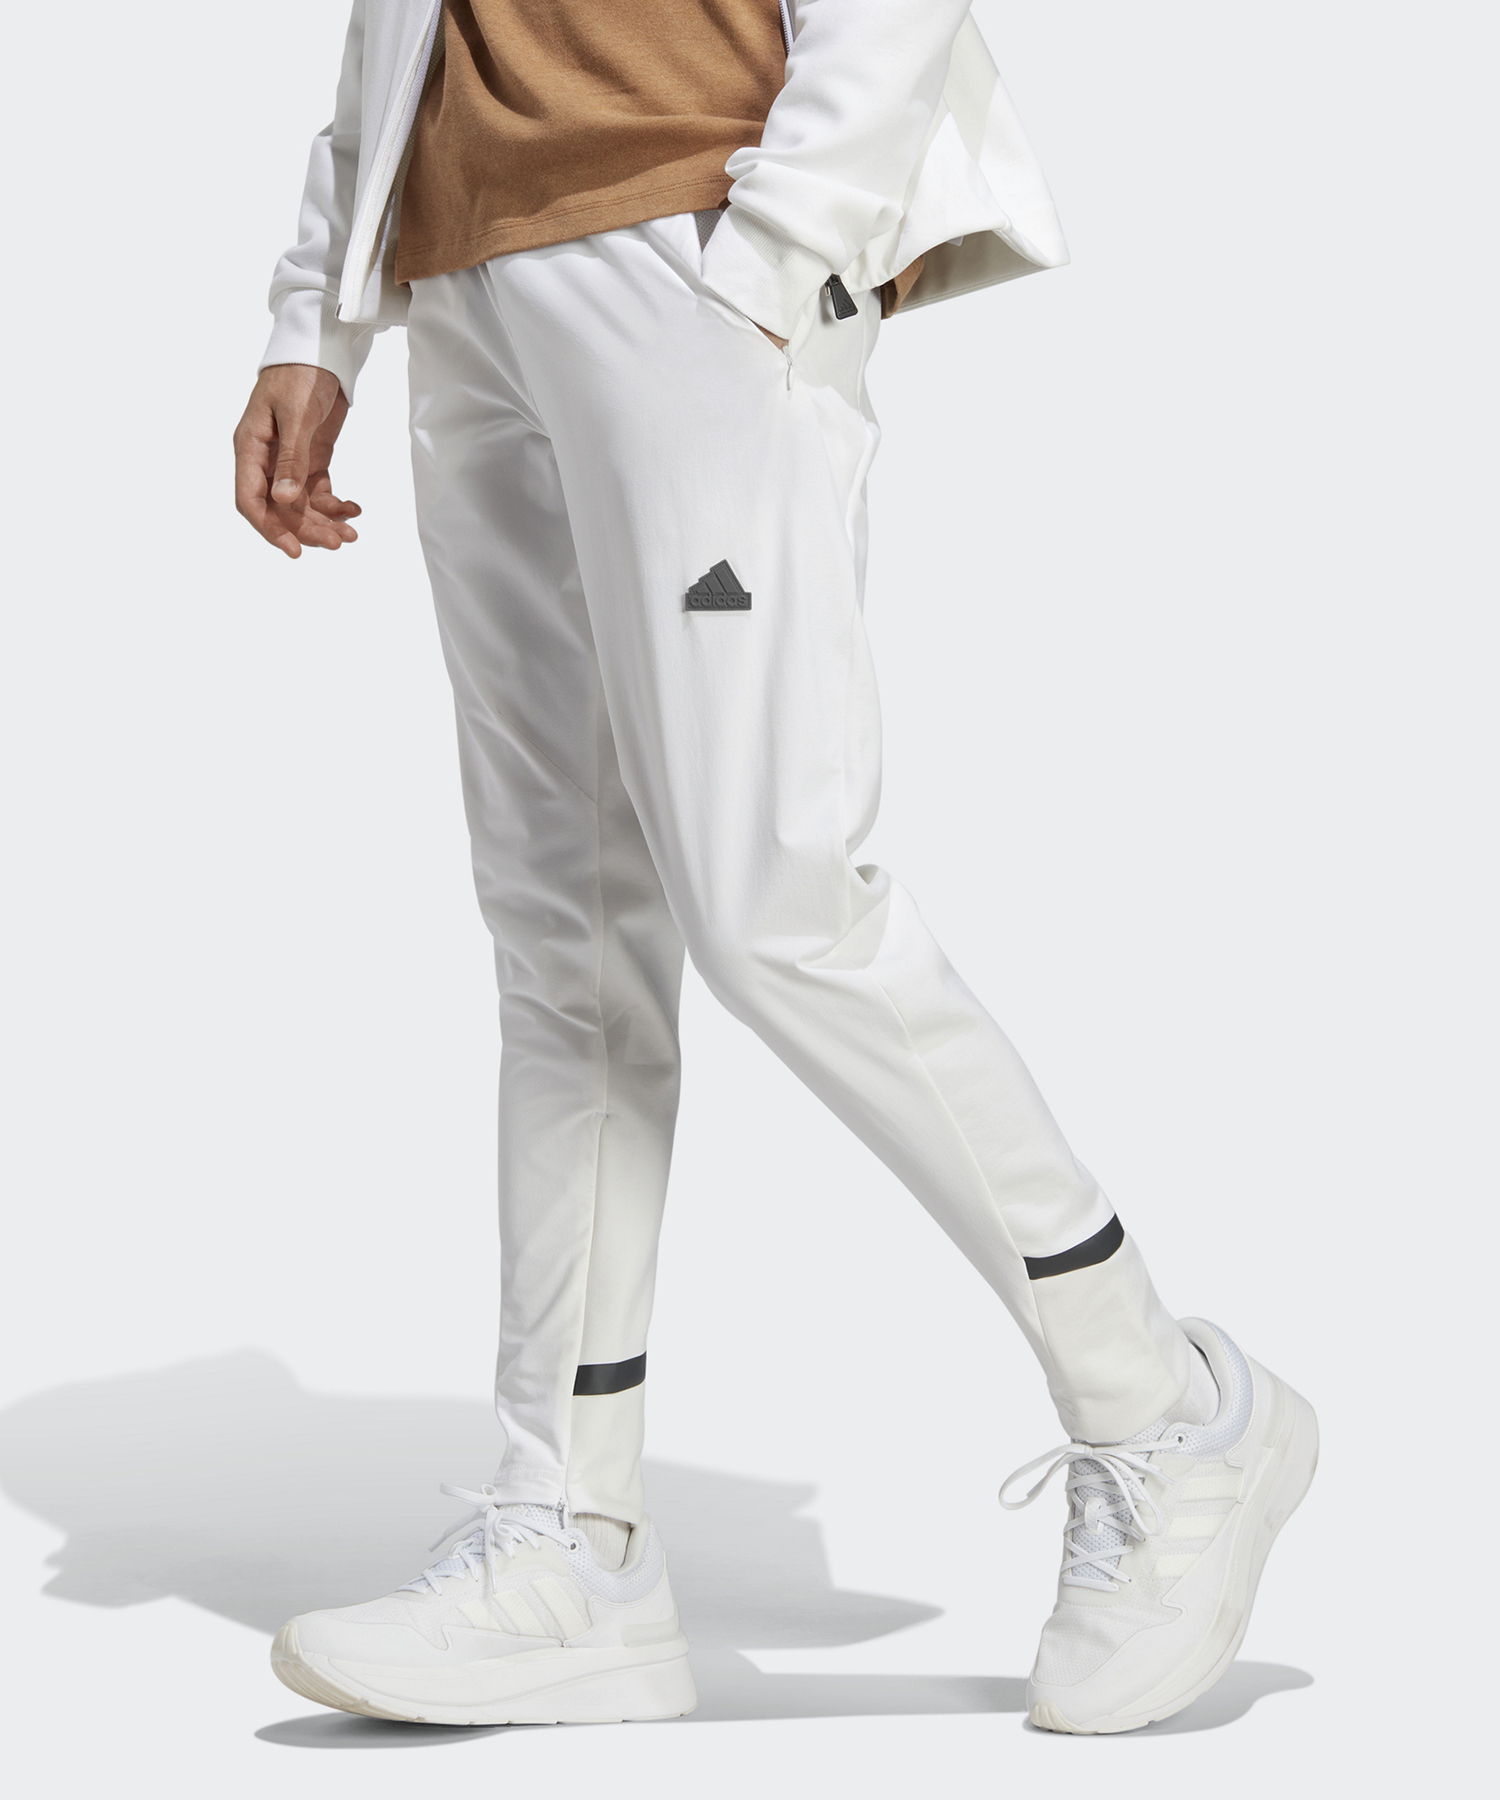 Adidas レディース Z.N.E. Tapp パンツ ホワイト